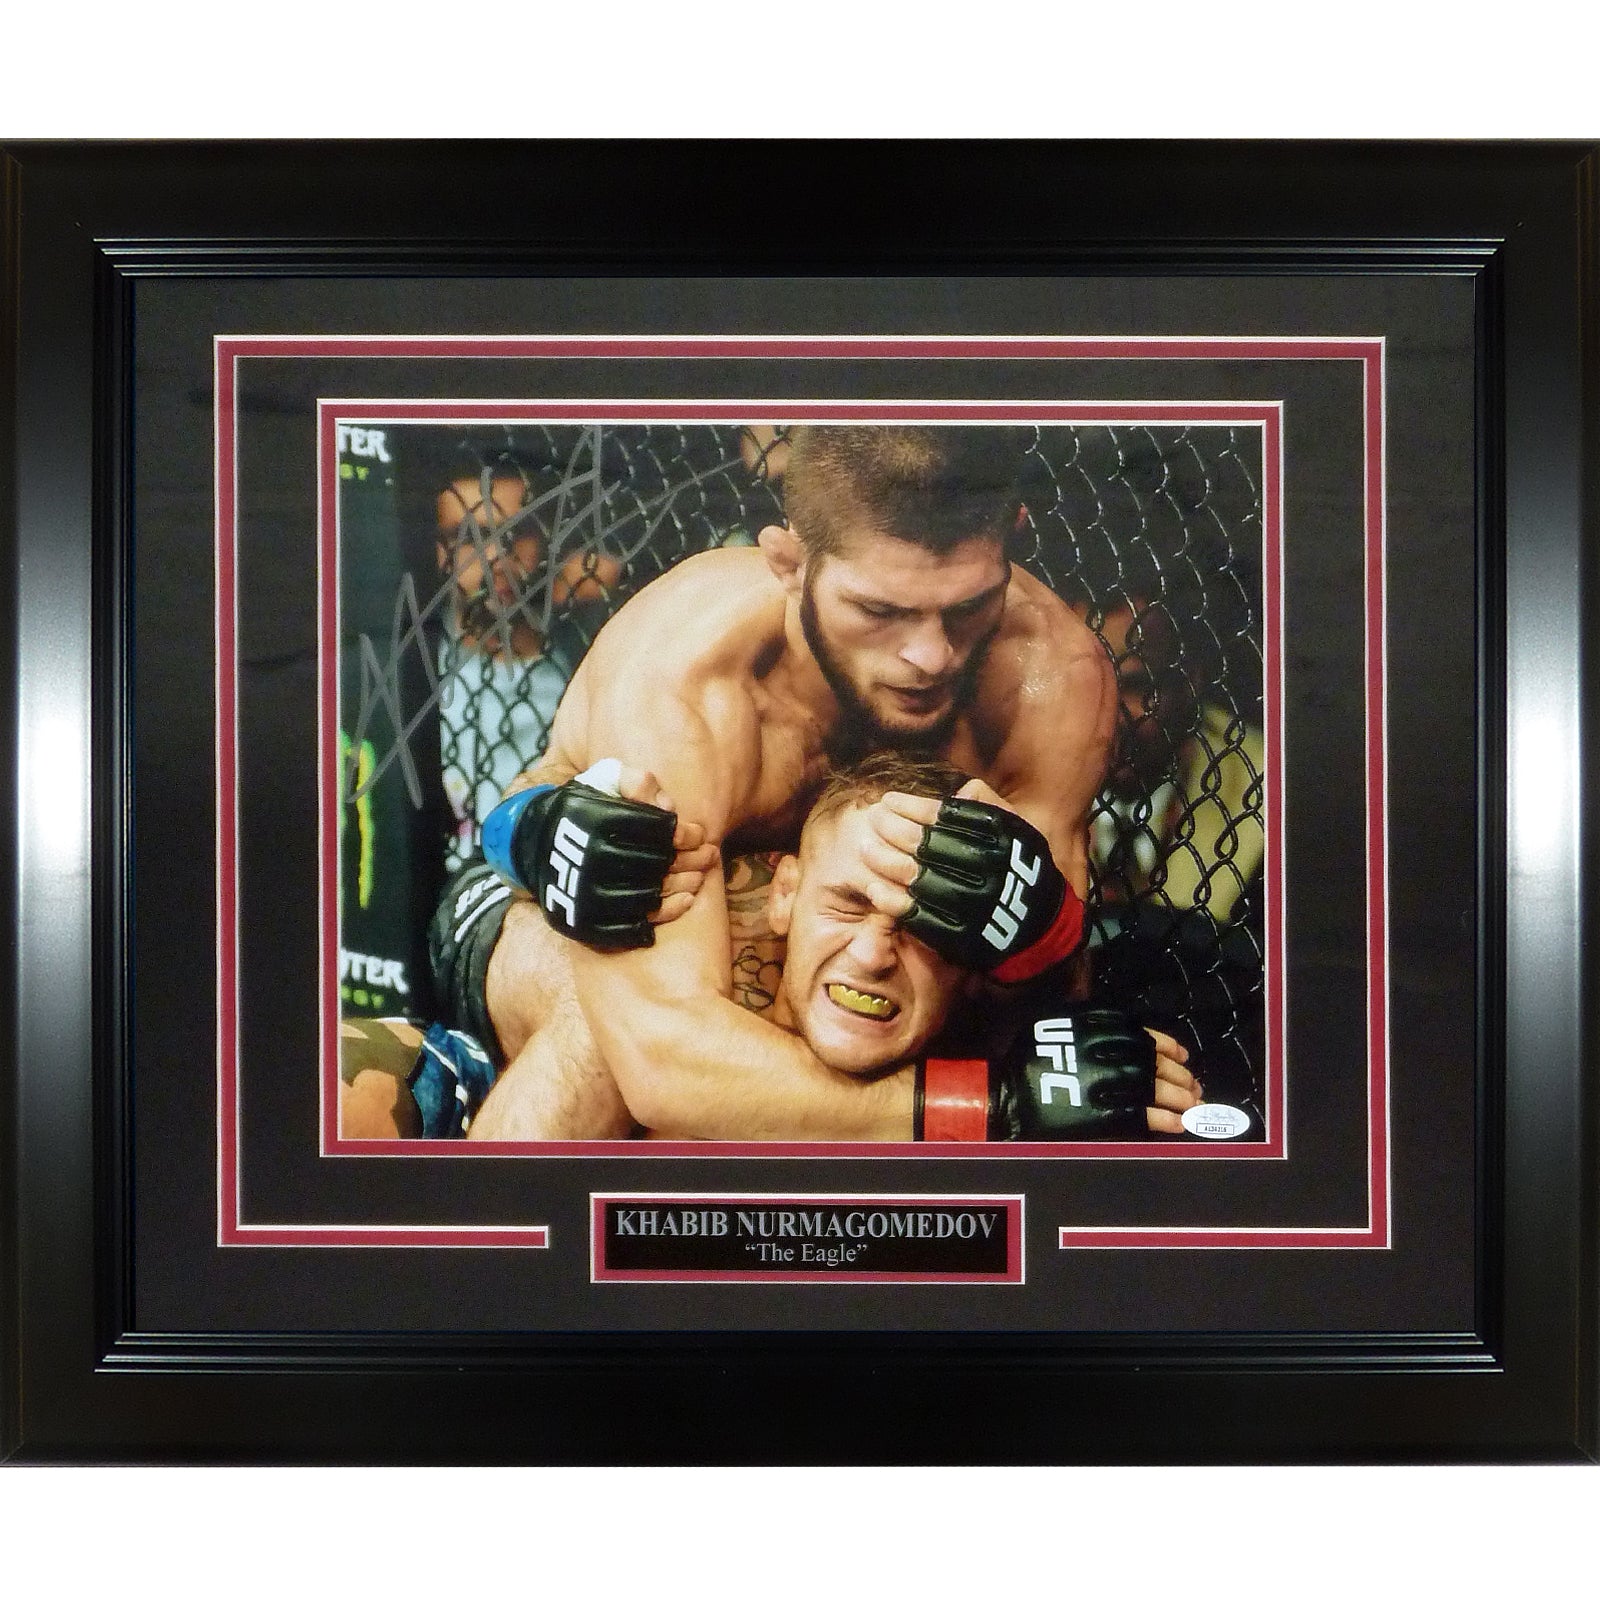 Khabib Nurmagomedov Autographed UFC MMA Deluxe Framed 11x14 Photo - JSA